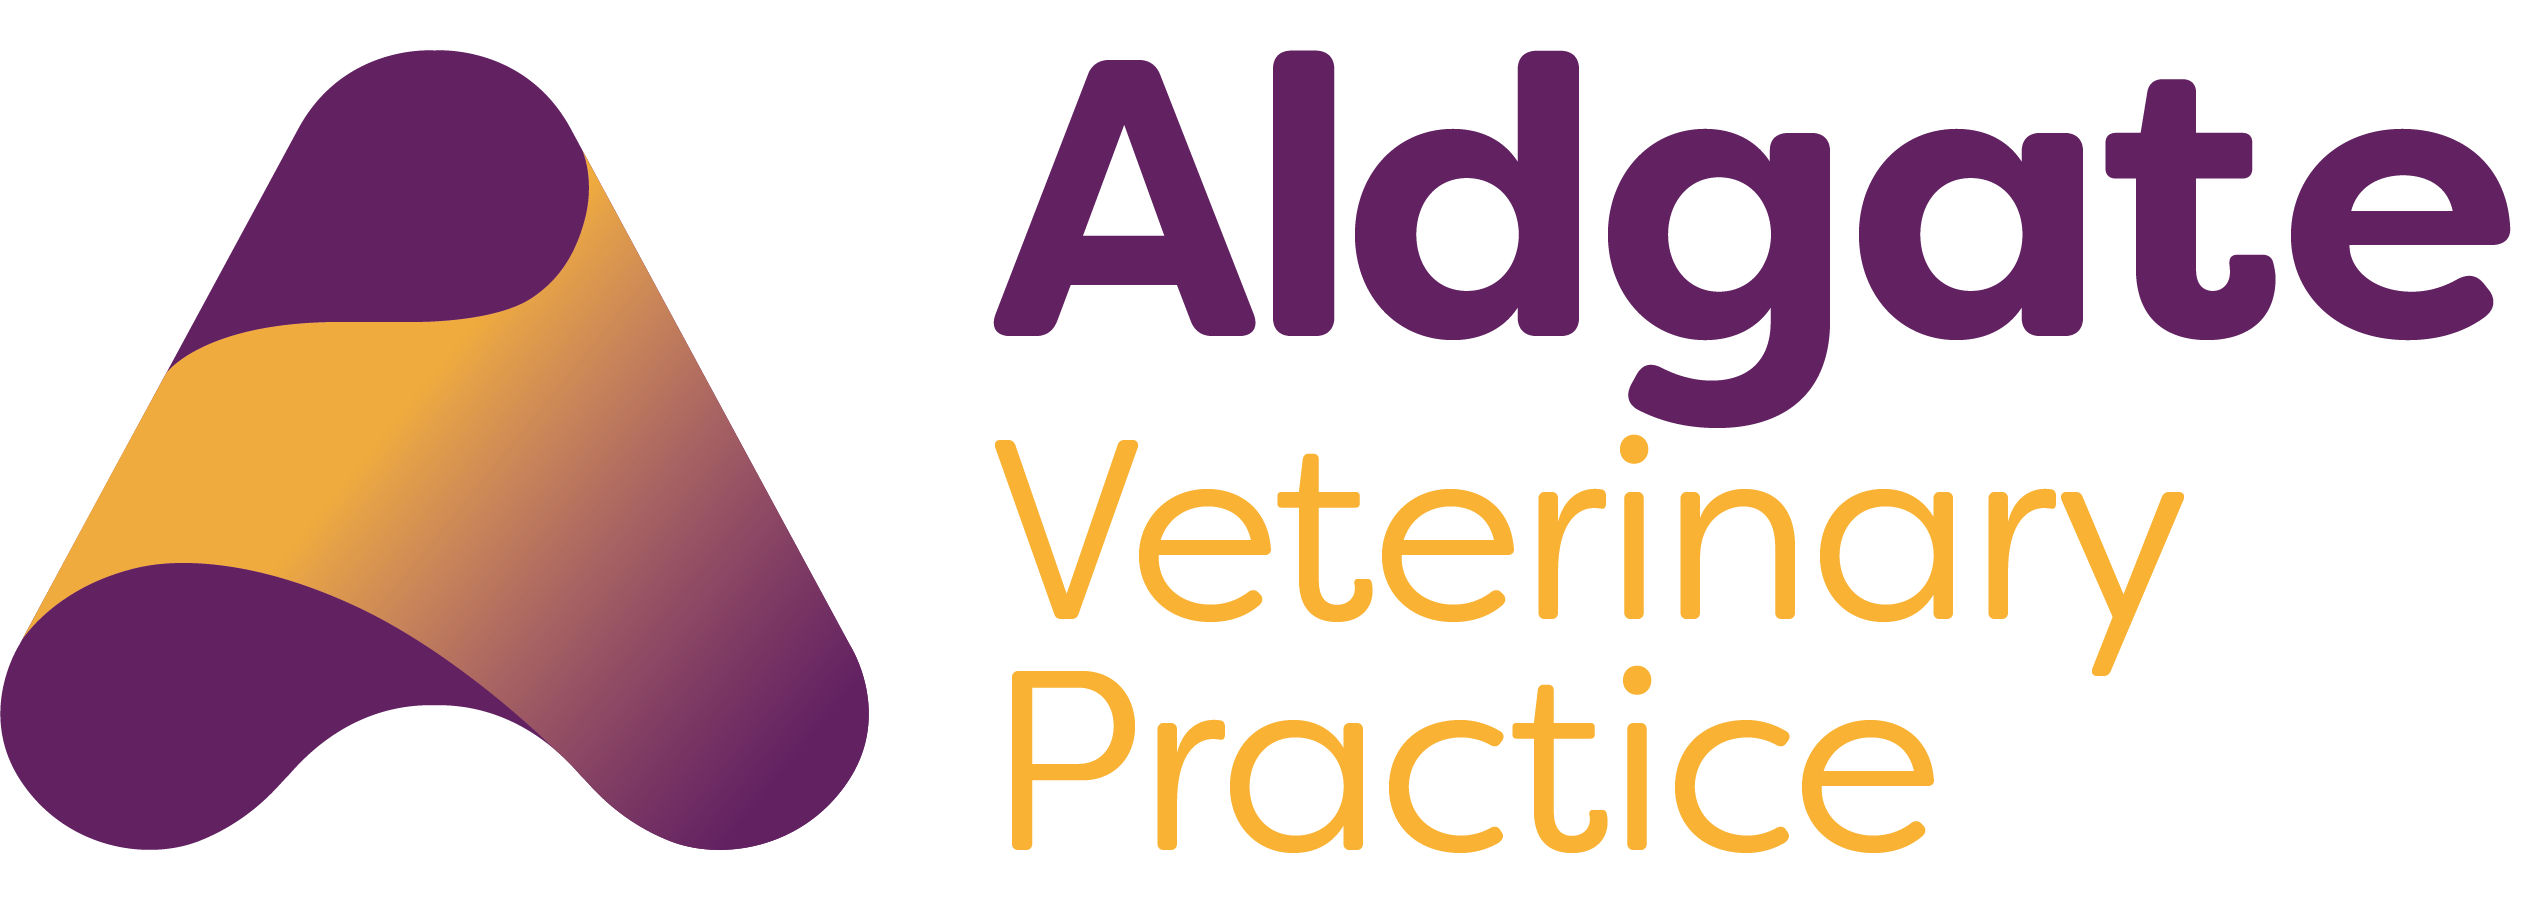 logo for Aldgate Veterinary Practice